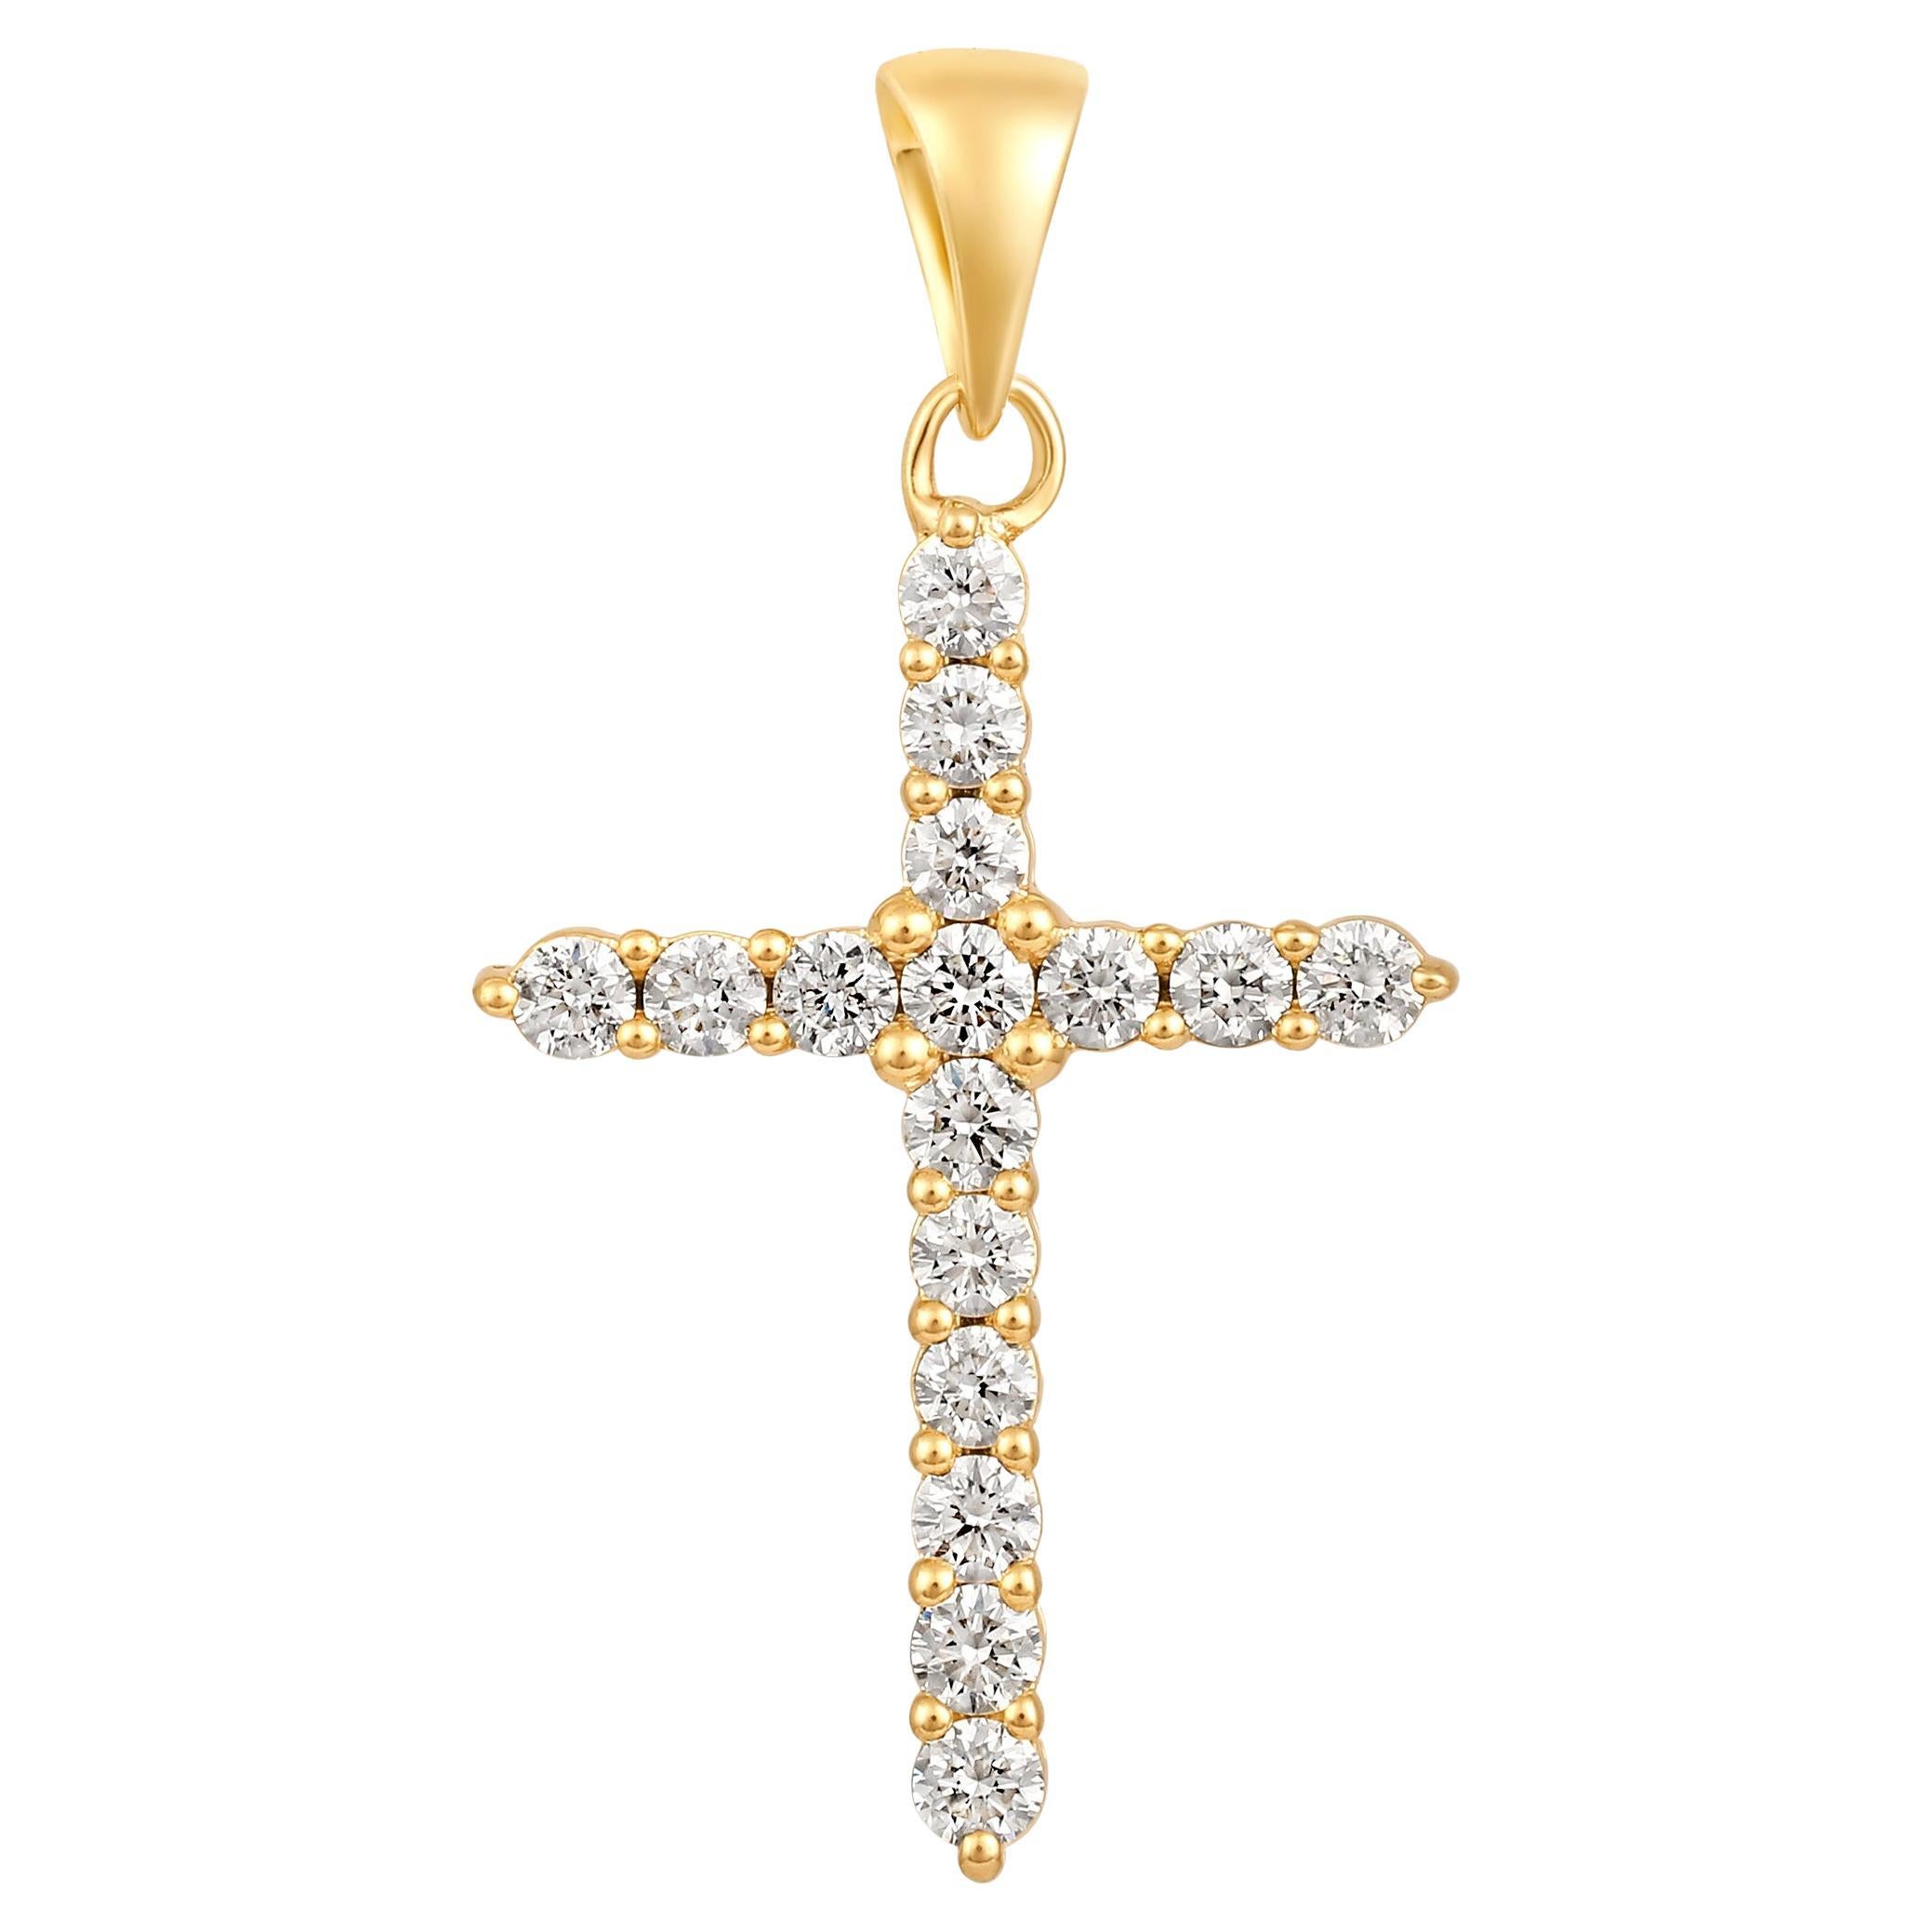 Pendentif jaune à breloque croix en or 14 carats certifié avec diamants naturels de 0,45 carat